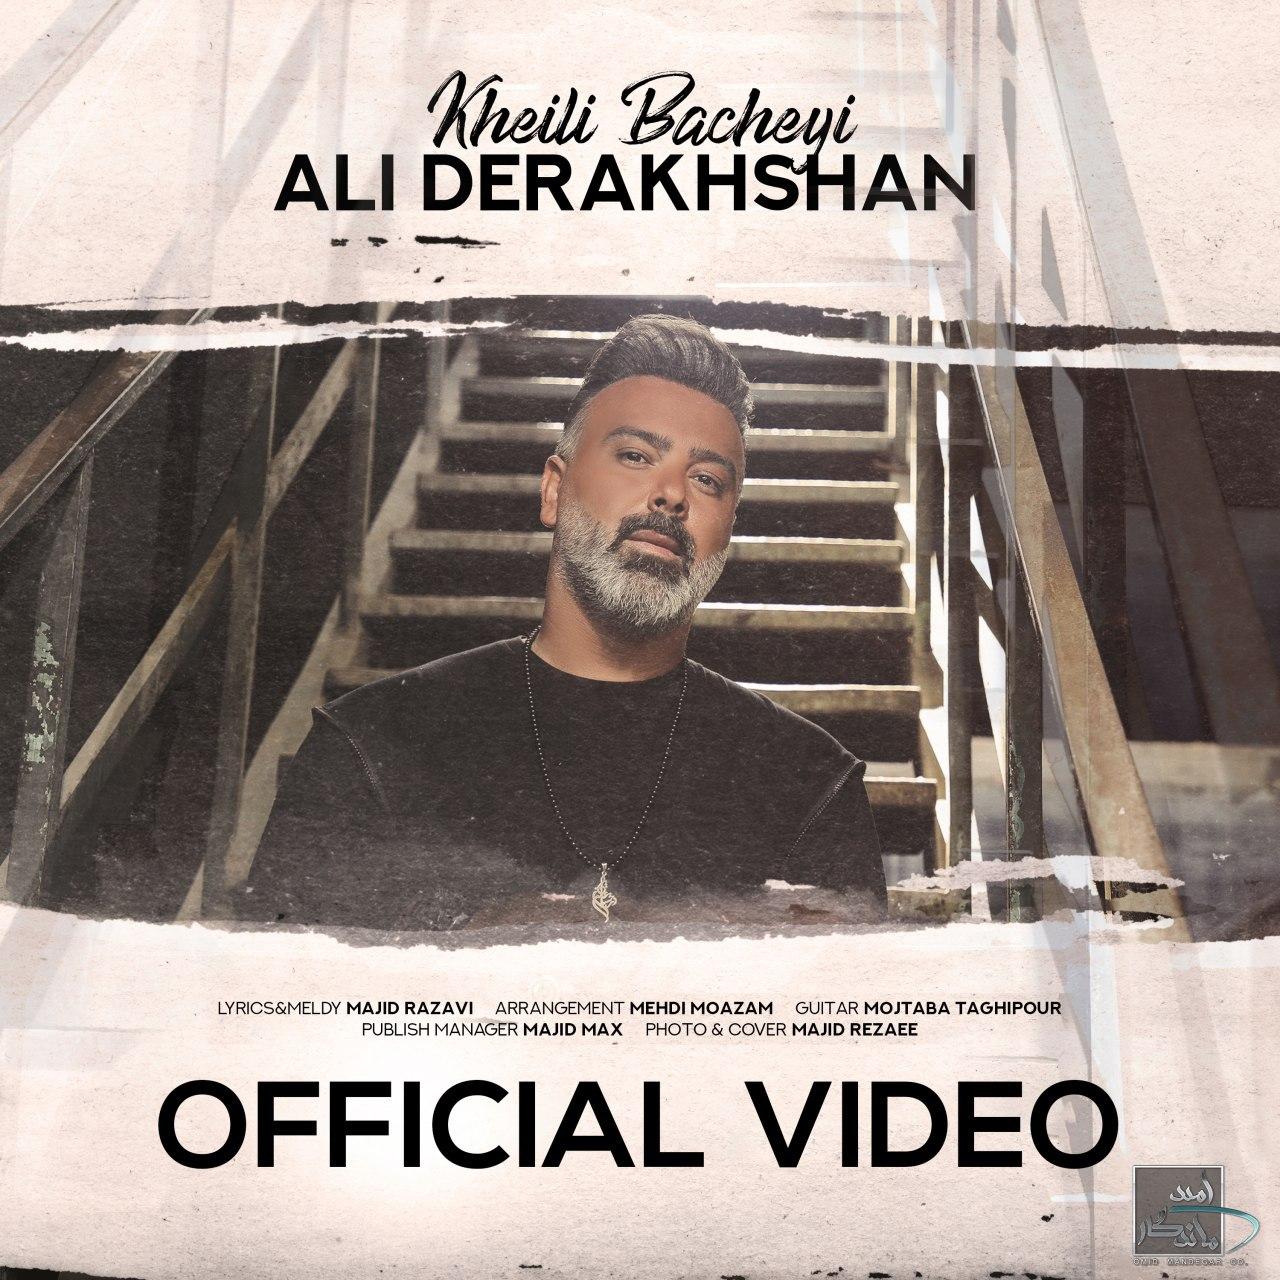 Ali Derakhshan – Kheili Bacheyi